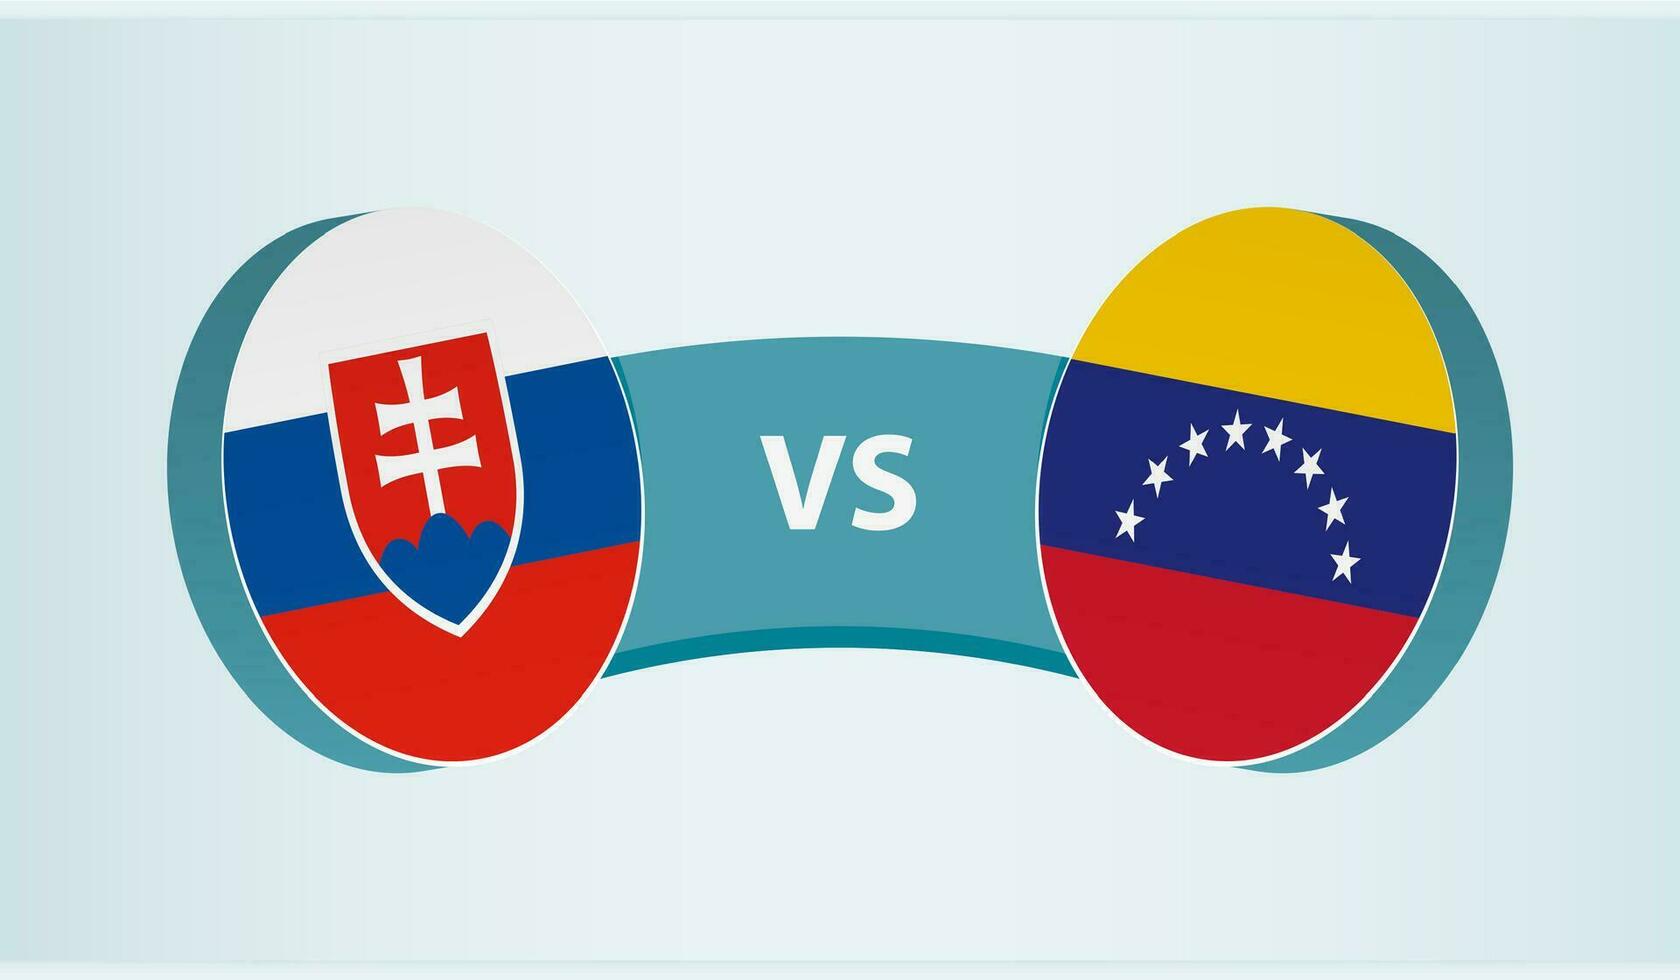 slovakia mot venezuela, team sporter konkurrens begrepp. vektor